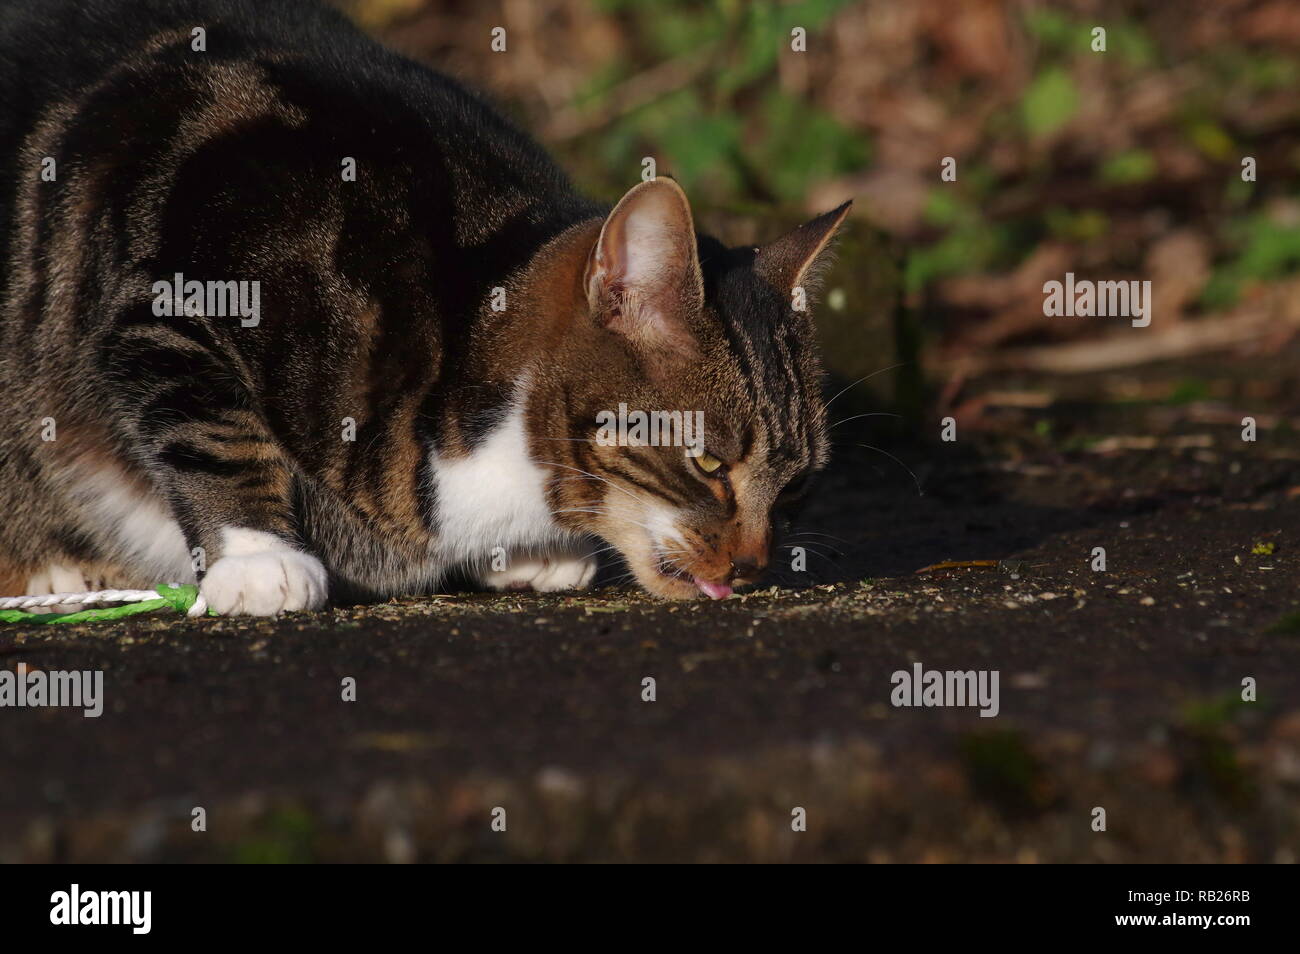 Tabby cat mangiare erba gatta Foto Stock